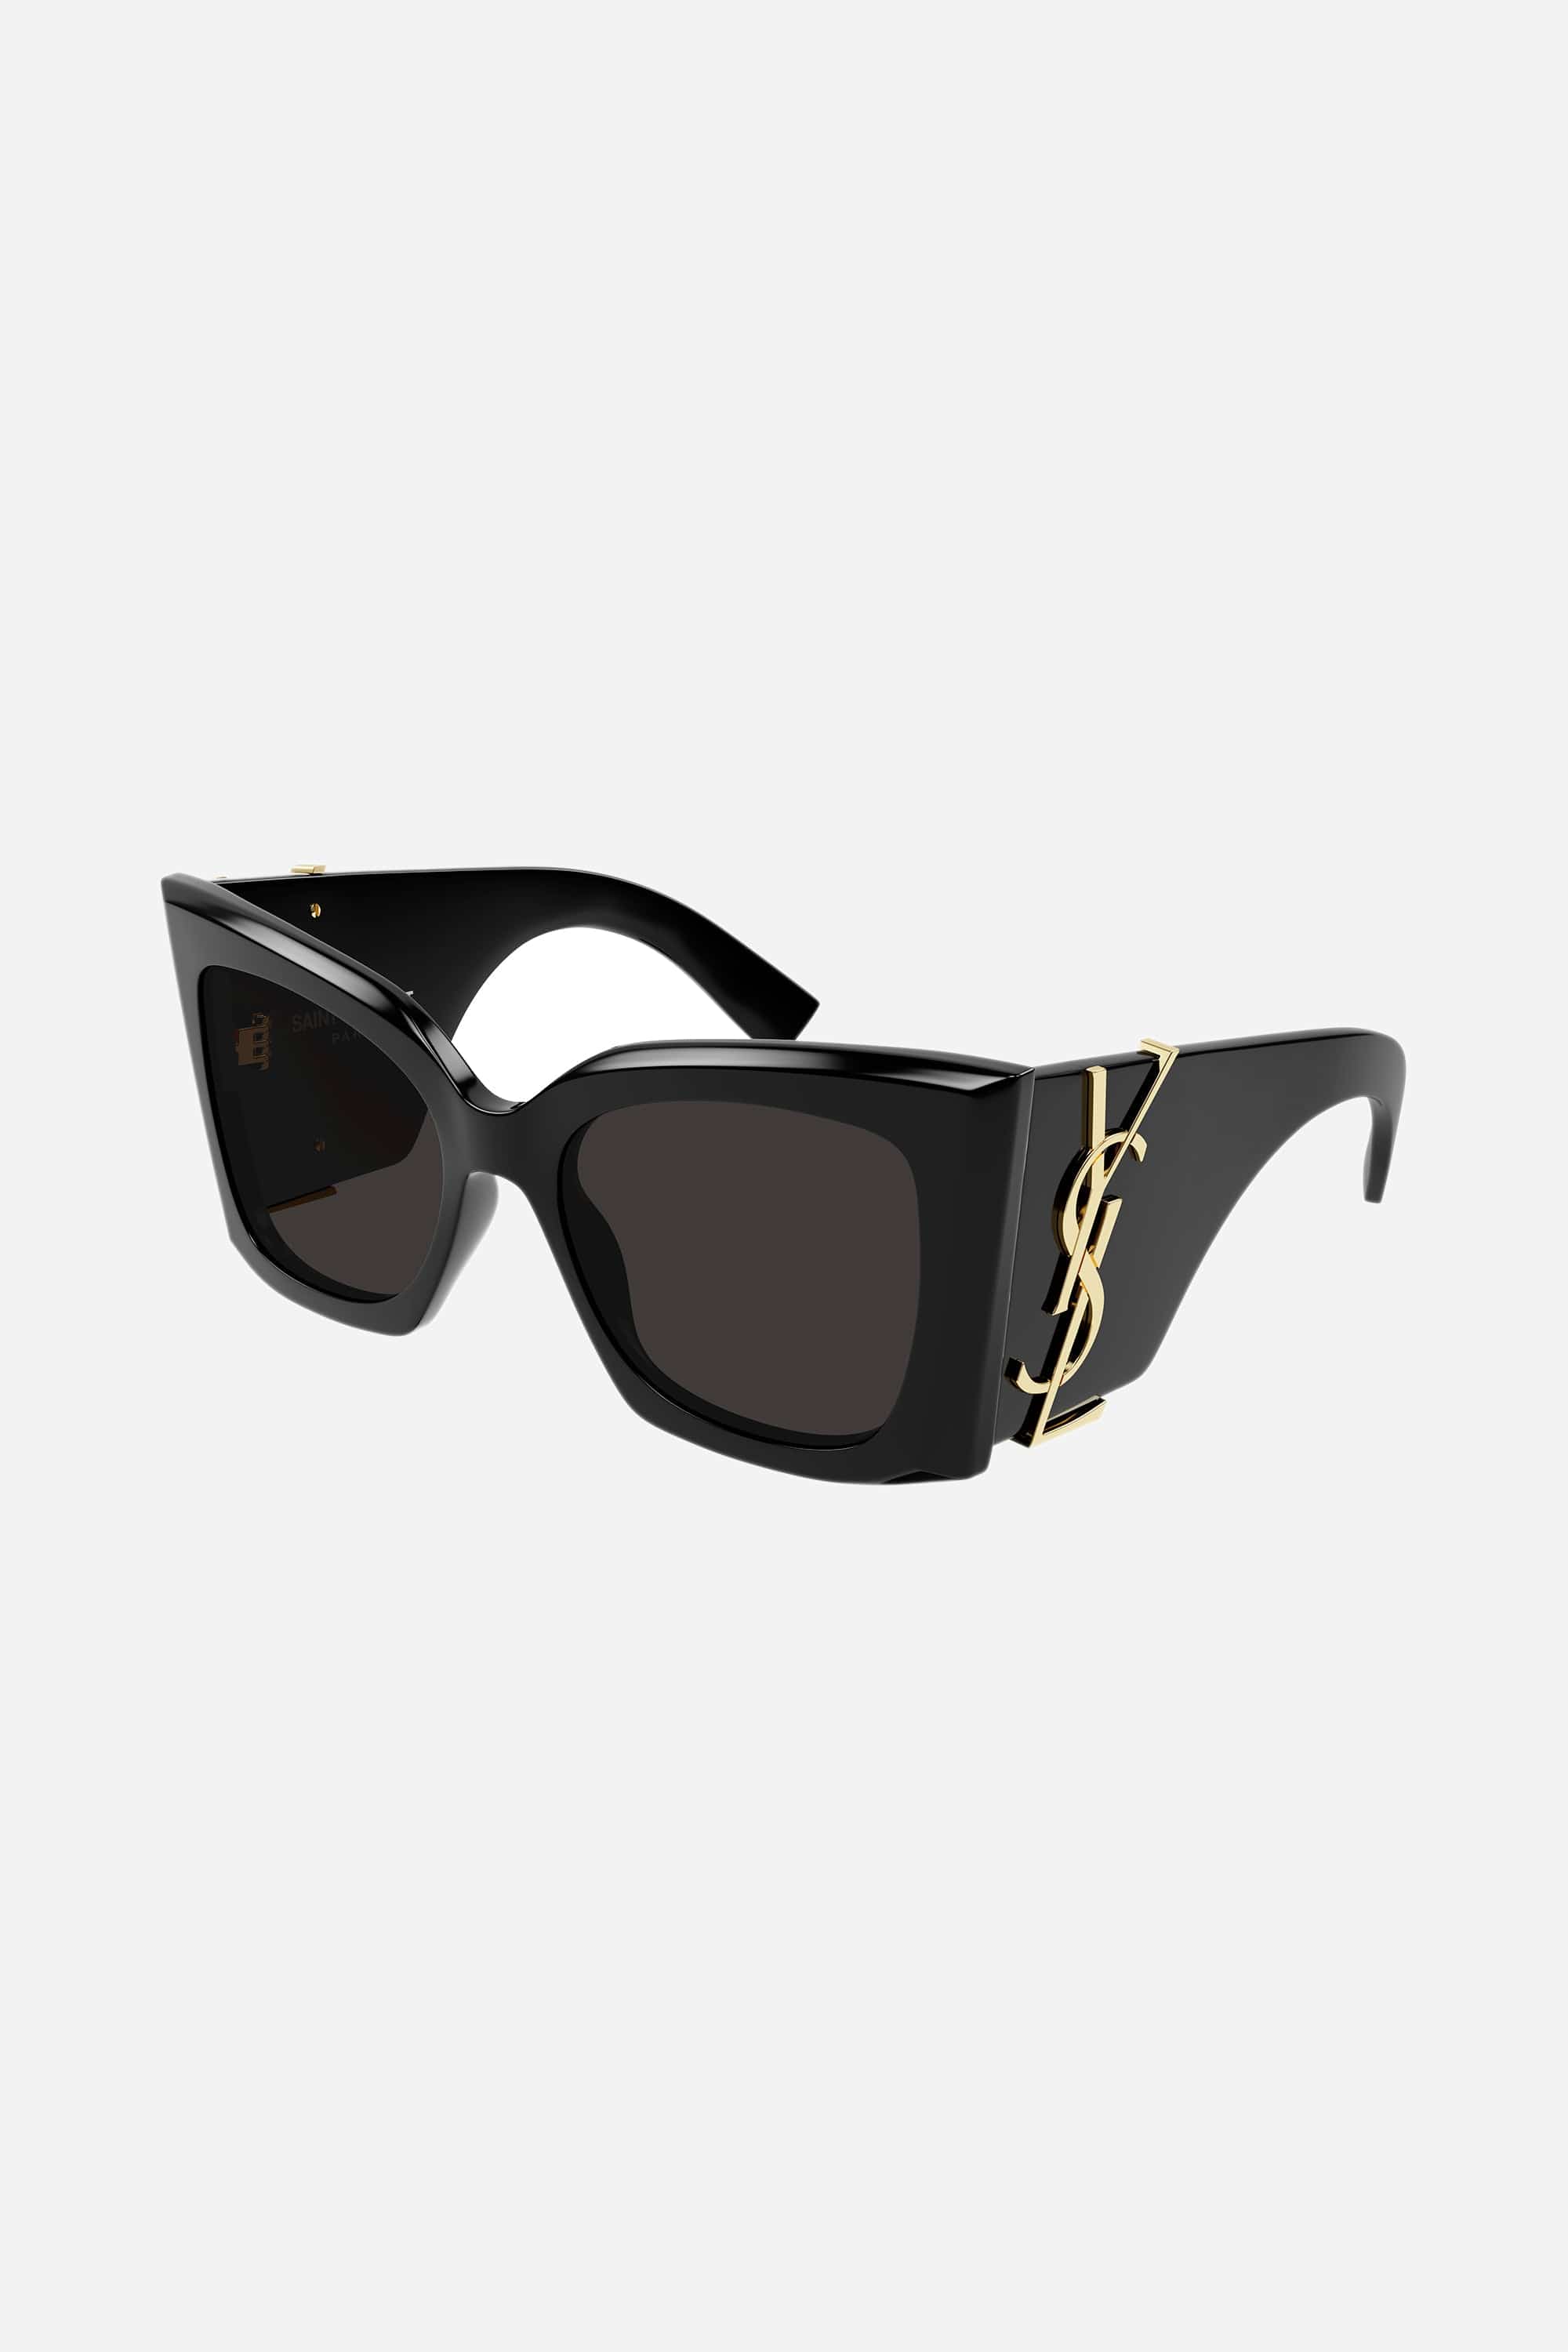 PRE ORDER Avail. April 23 -Saint Laurent blaze cat-eye black sunglasses - Eyewear Club